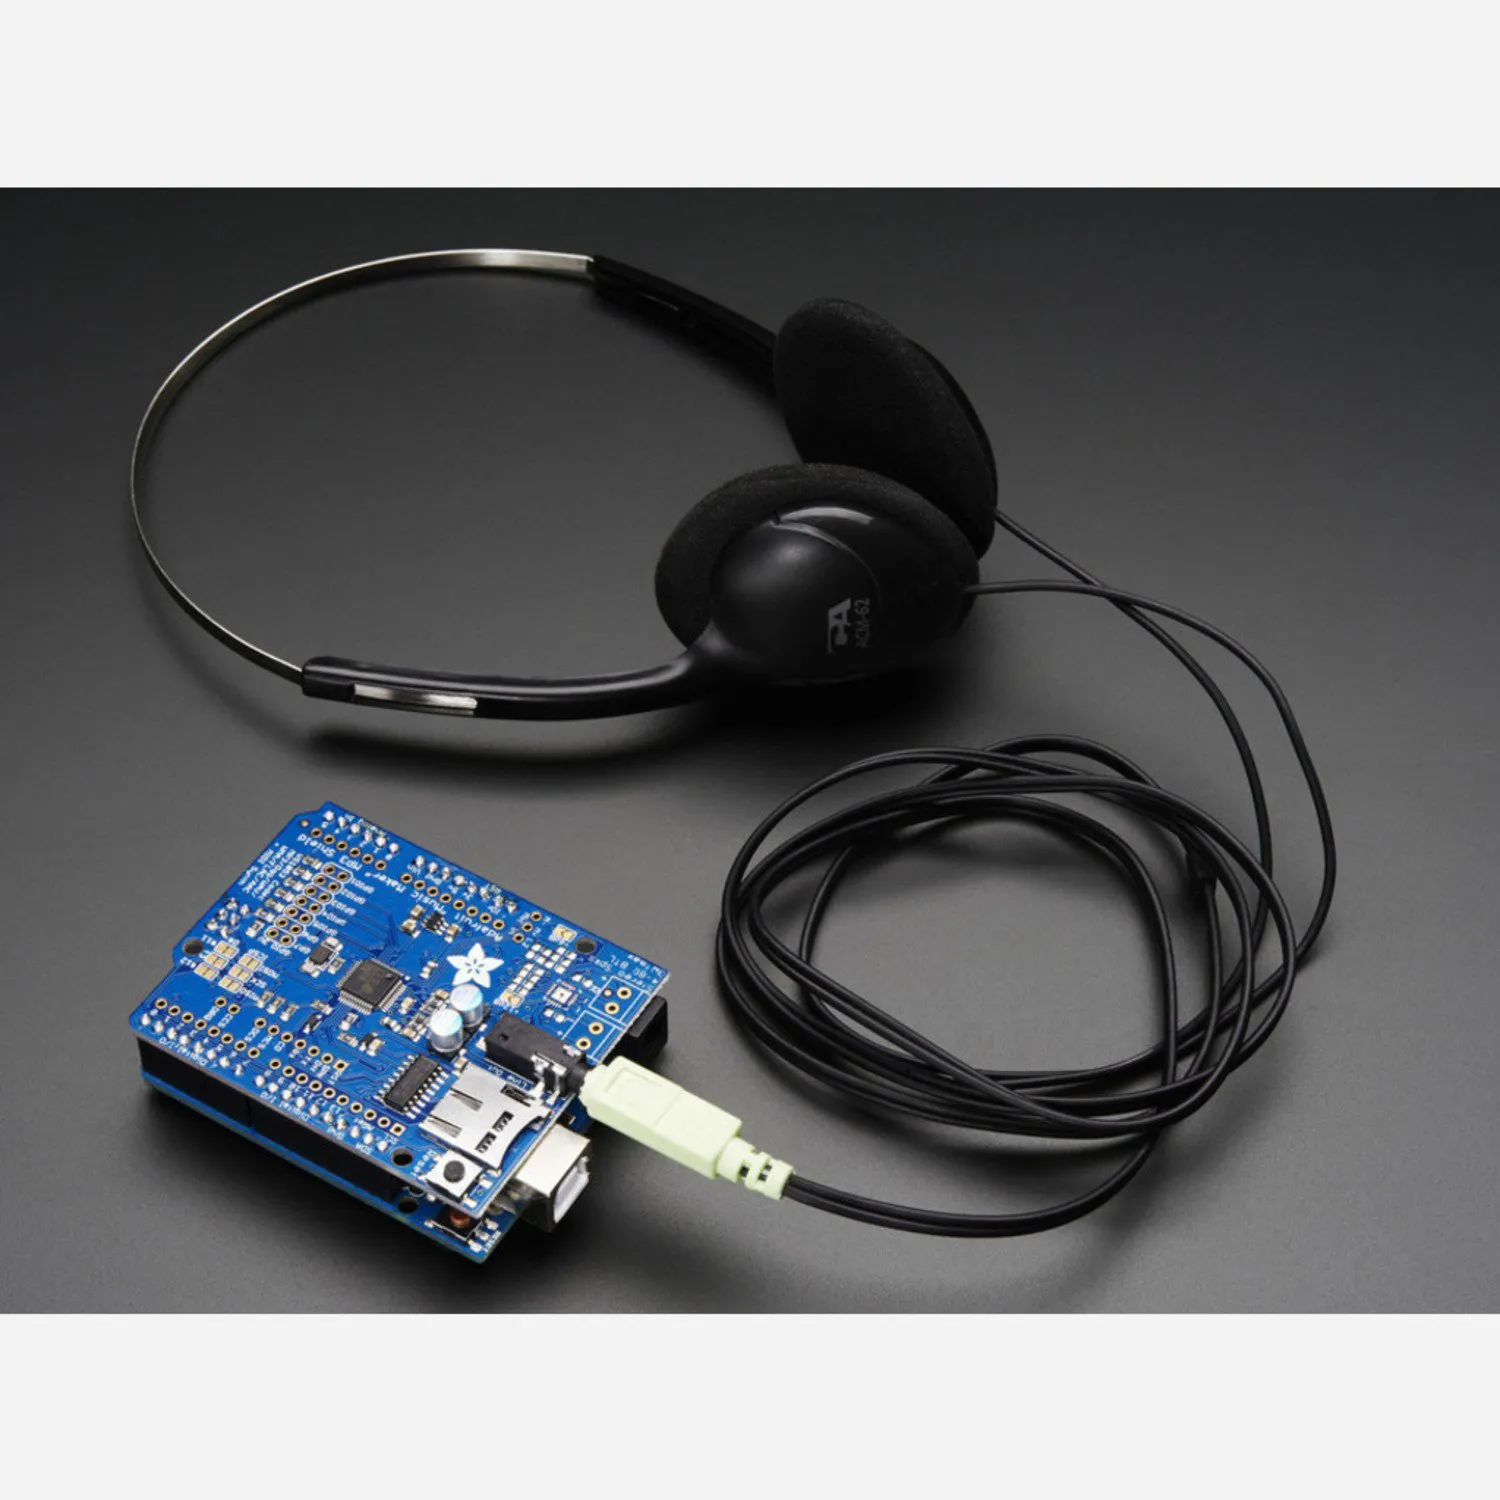 Photo of Adafruit Music Maker MP3 Shield for Arduino (MP3/Ogg/WAV...)